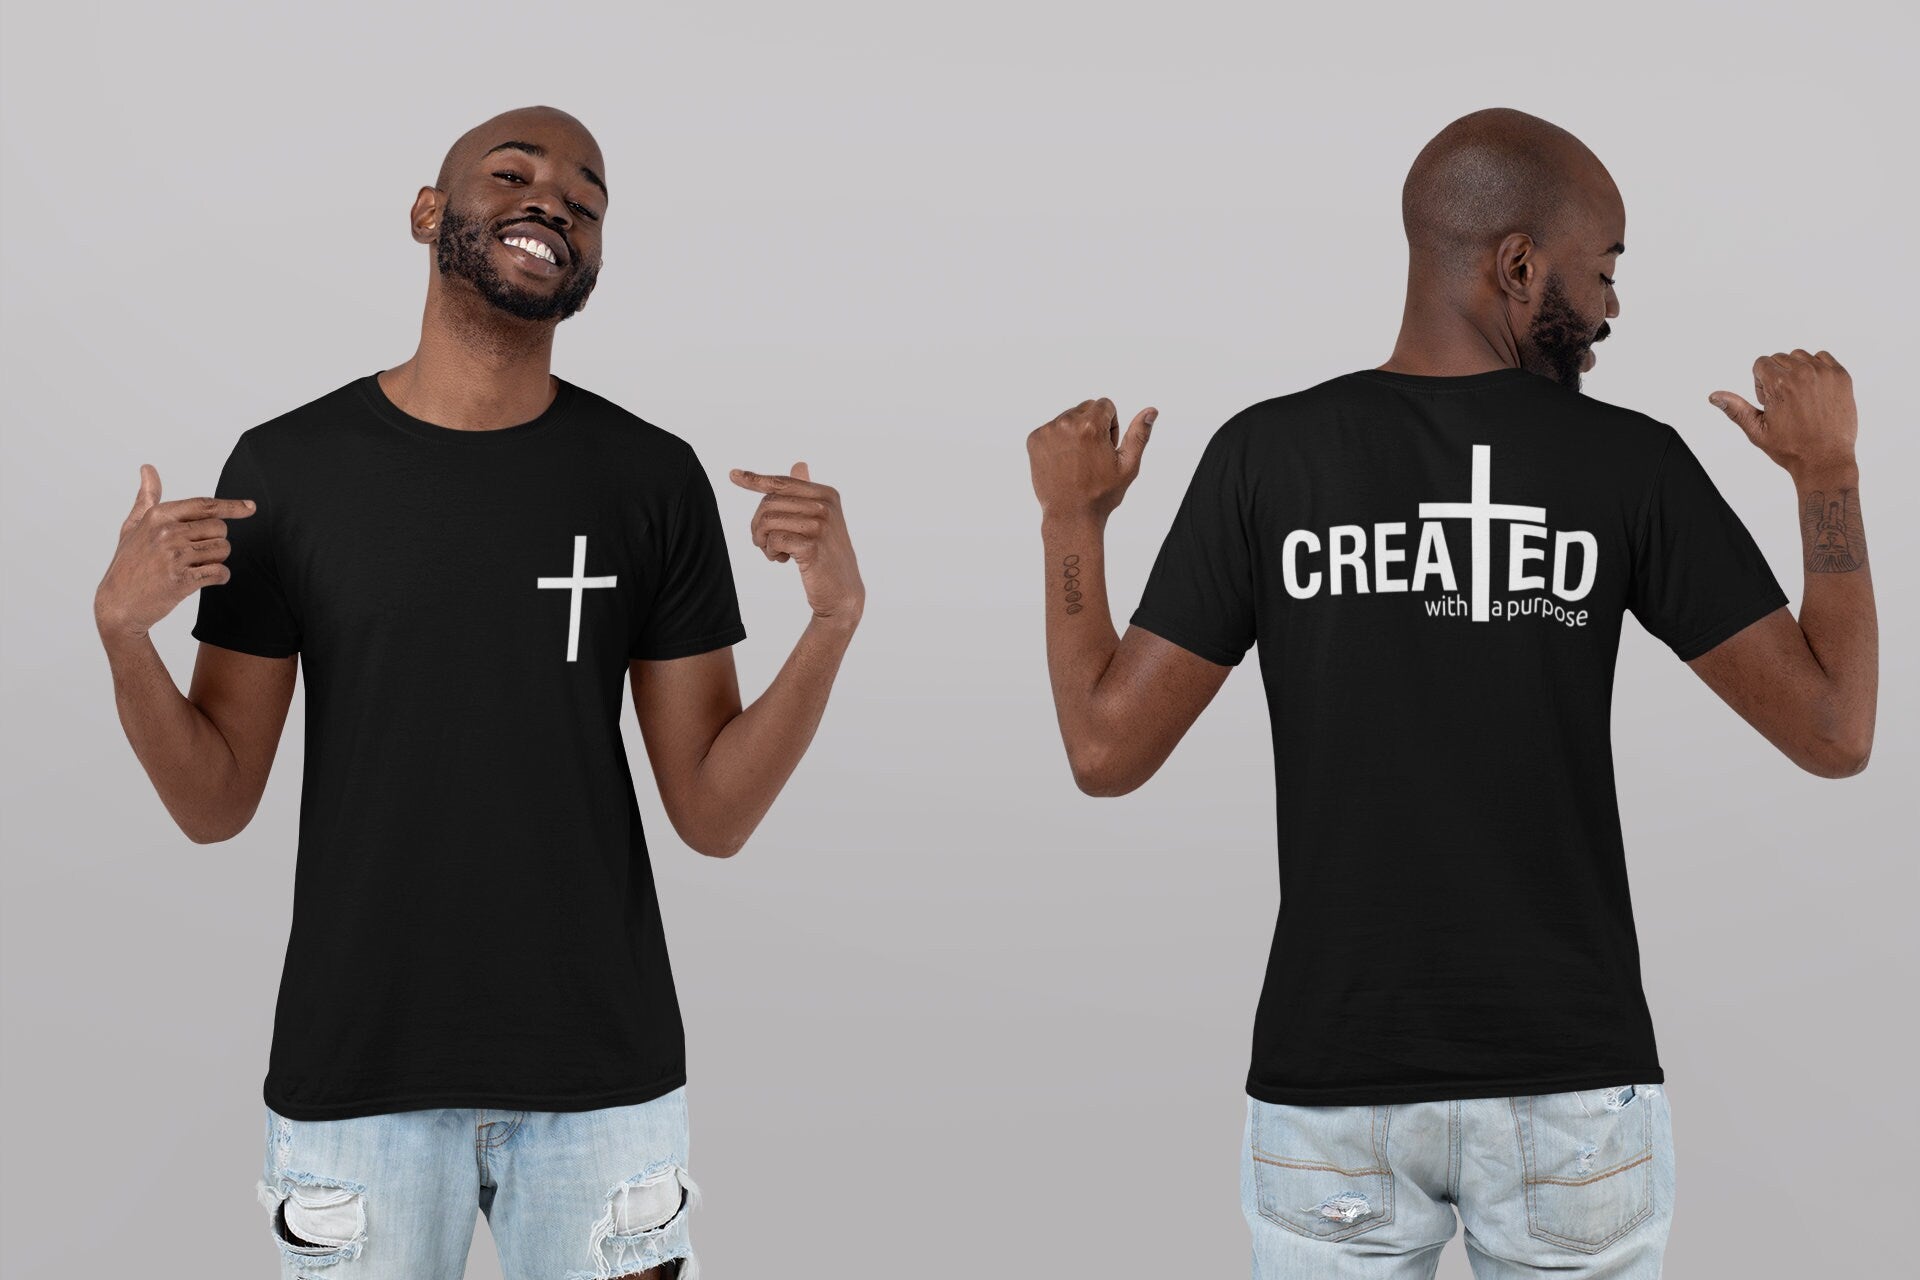 Created with A Purpose Shirt, Christian Shirt, Religious Shirt, Inspirational Shirt, Thankful Grateful Blessed Shirt, Bible Shirt, wwjd